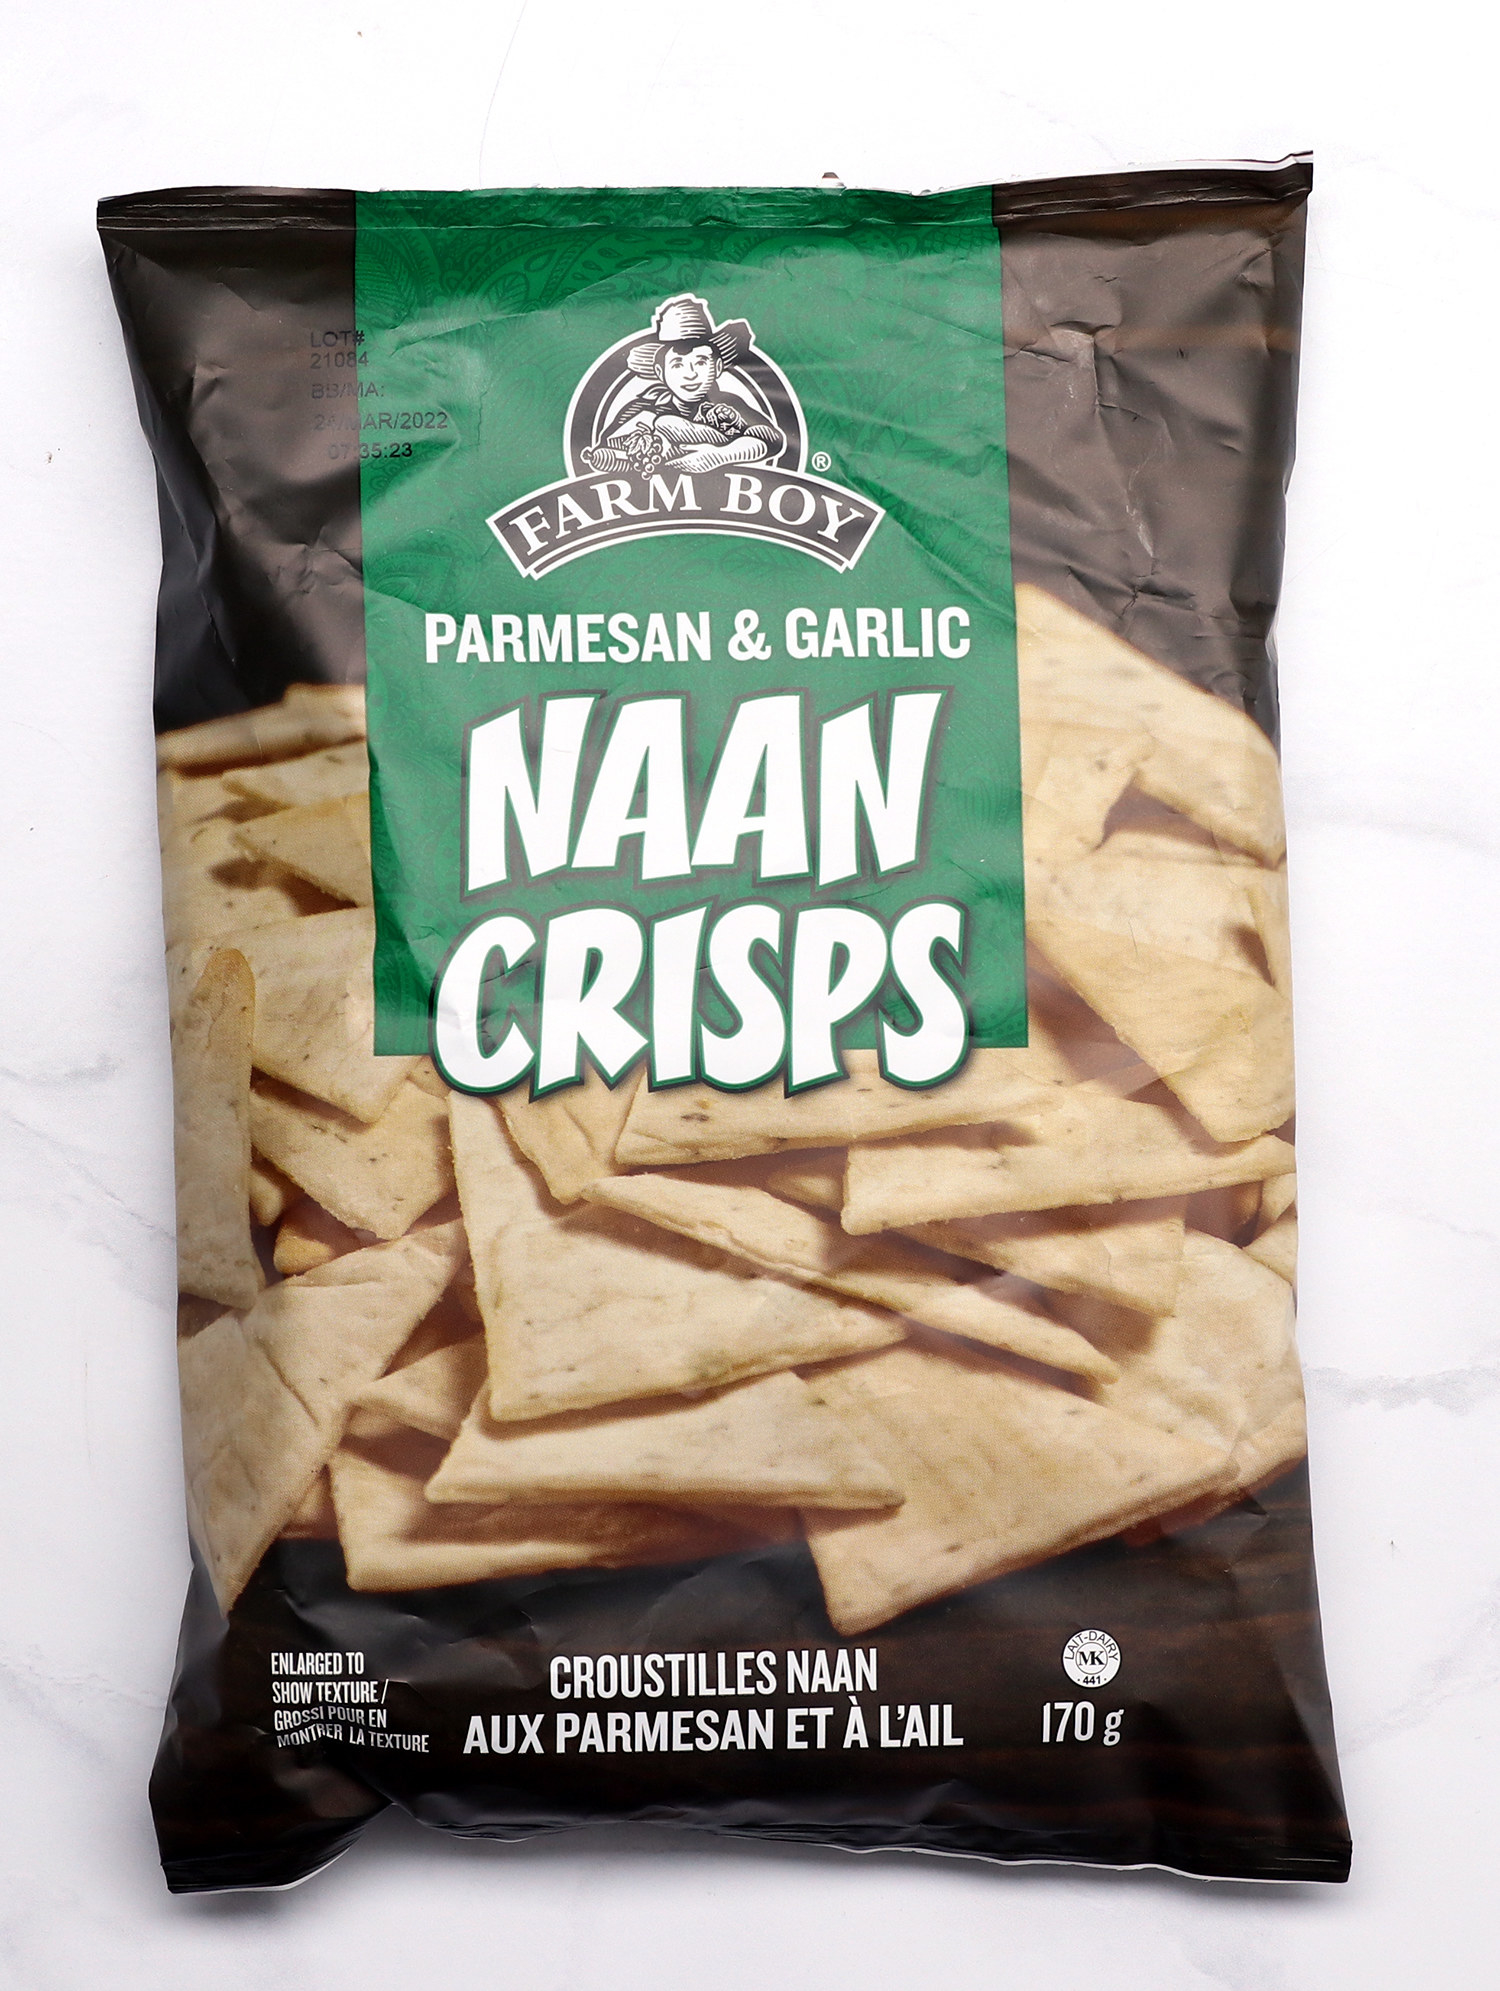 An overhead product shot of Naan Crisps